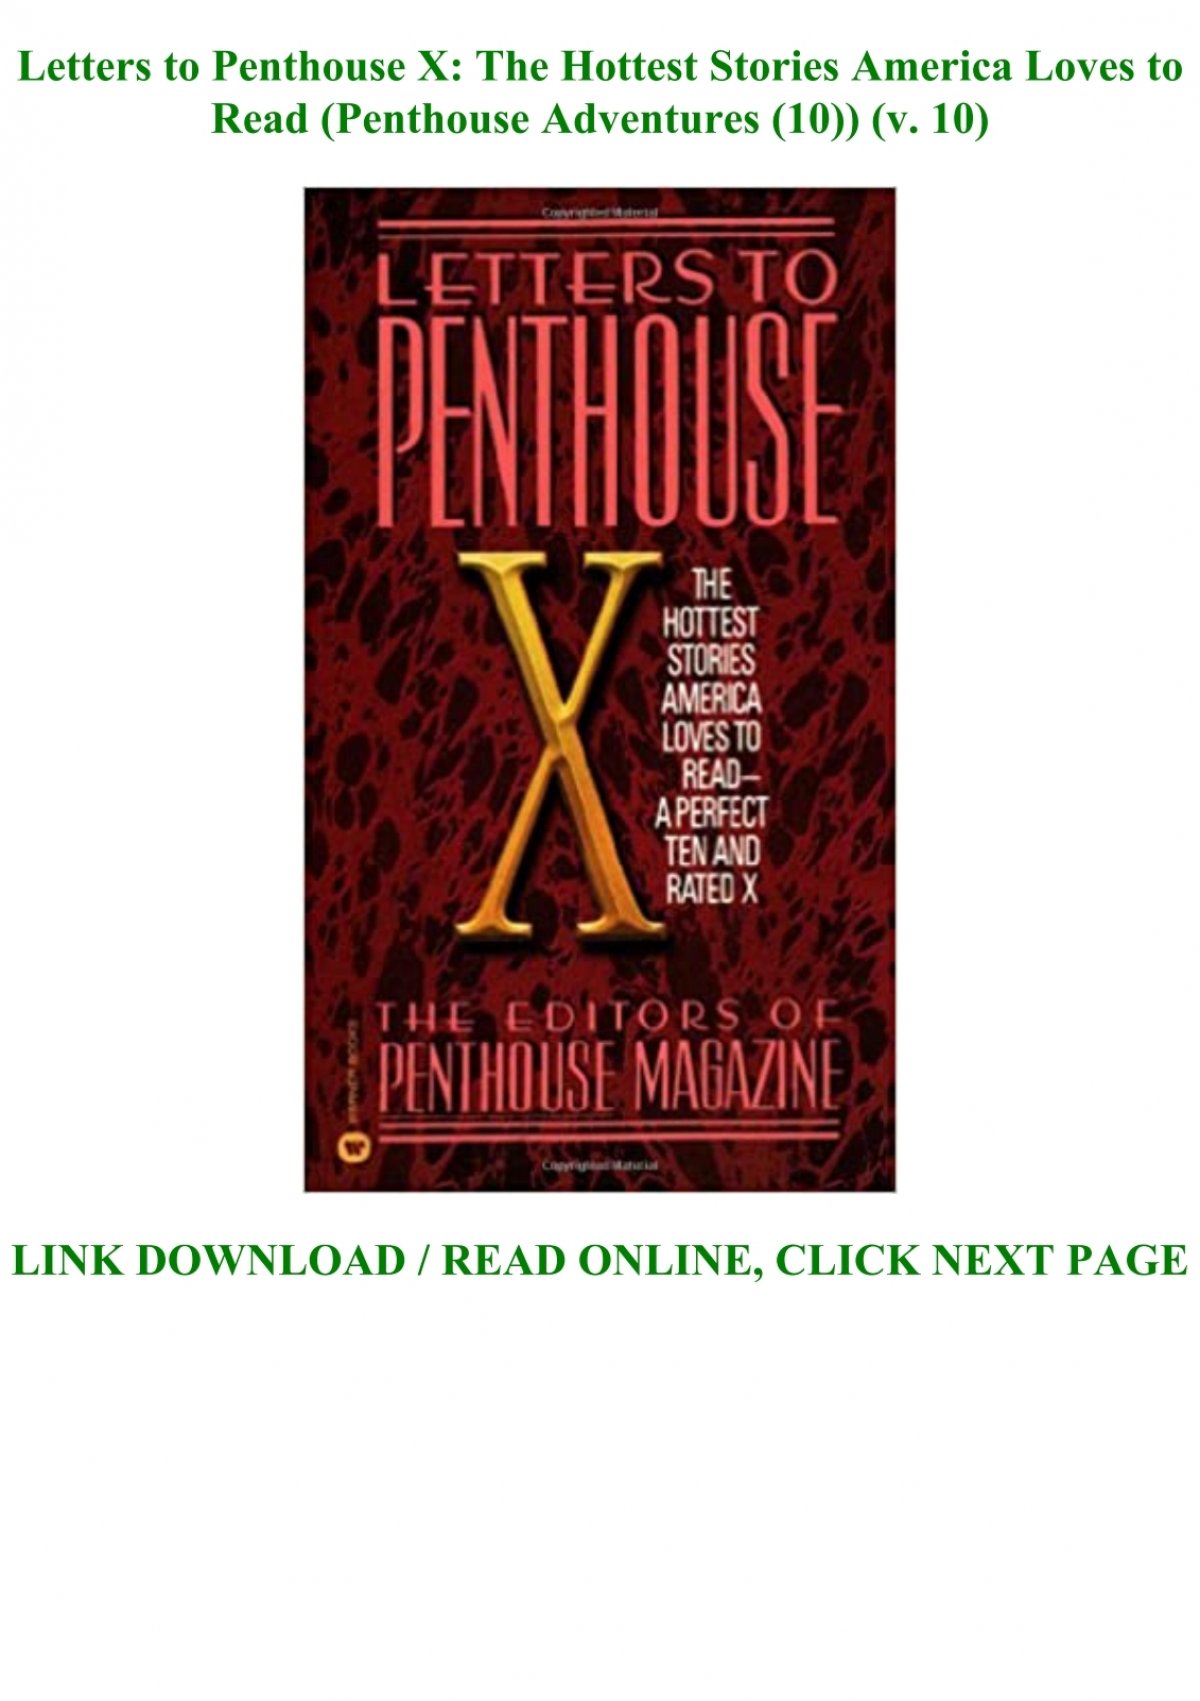 Best of Penthouse forum letters online